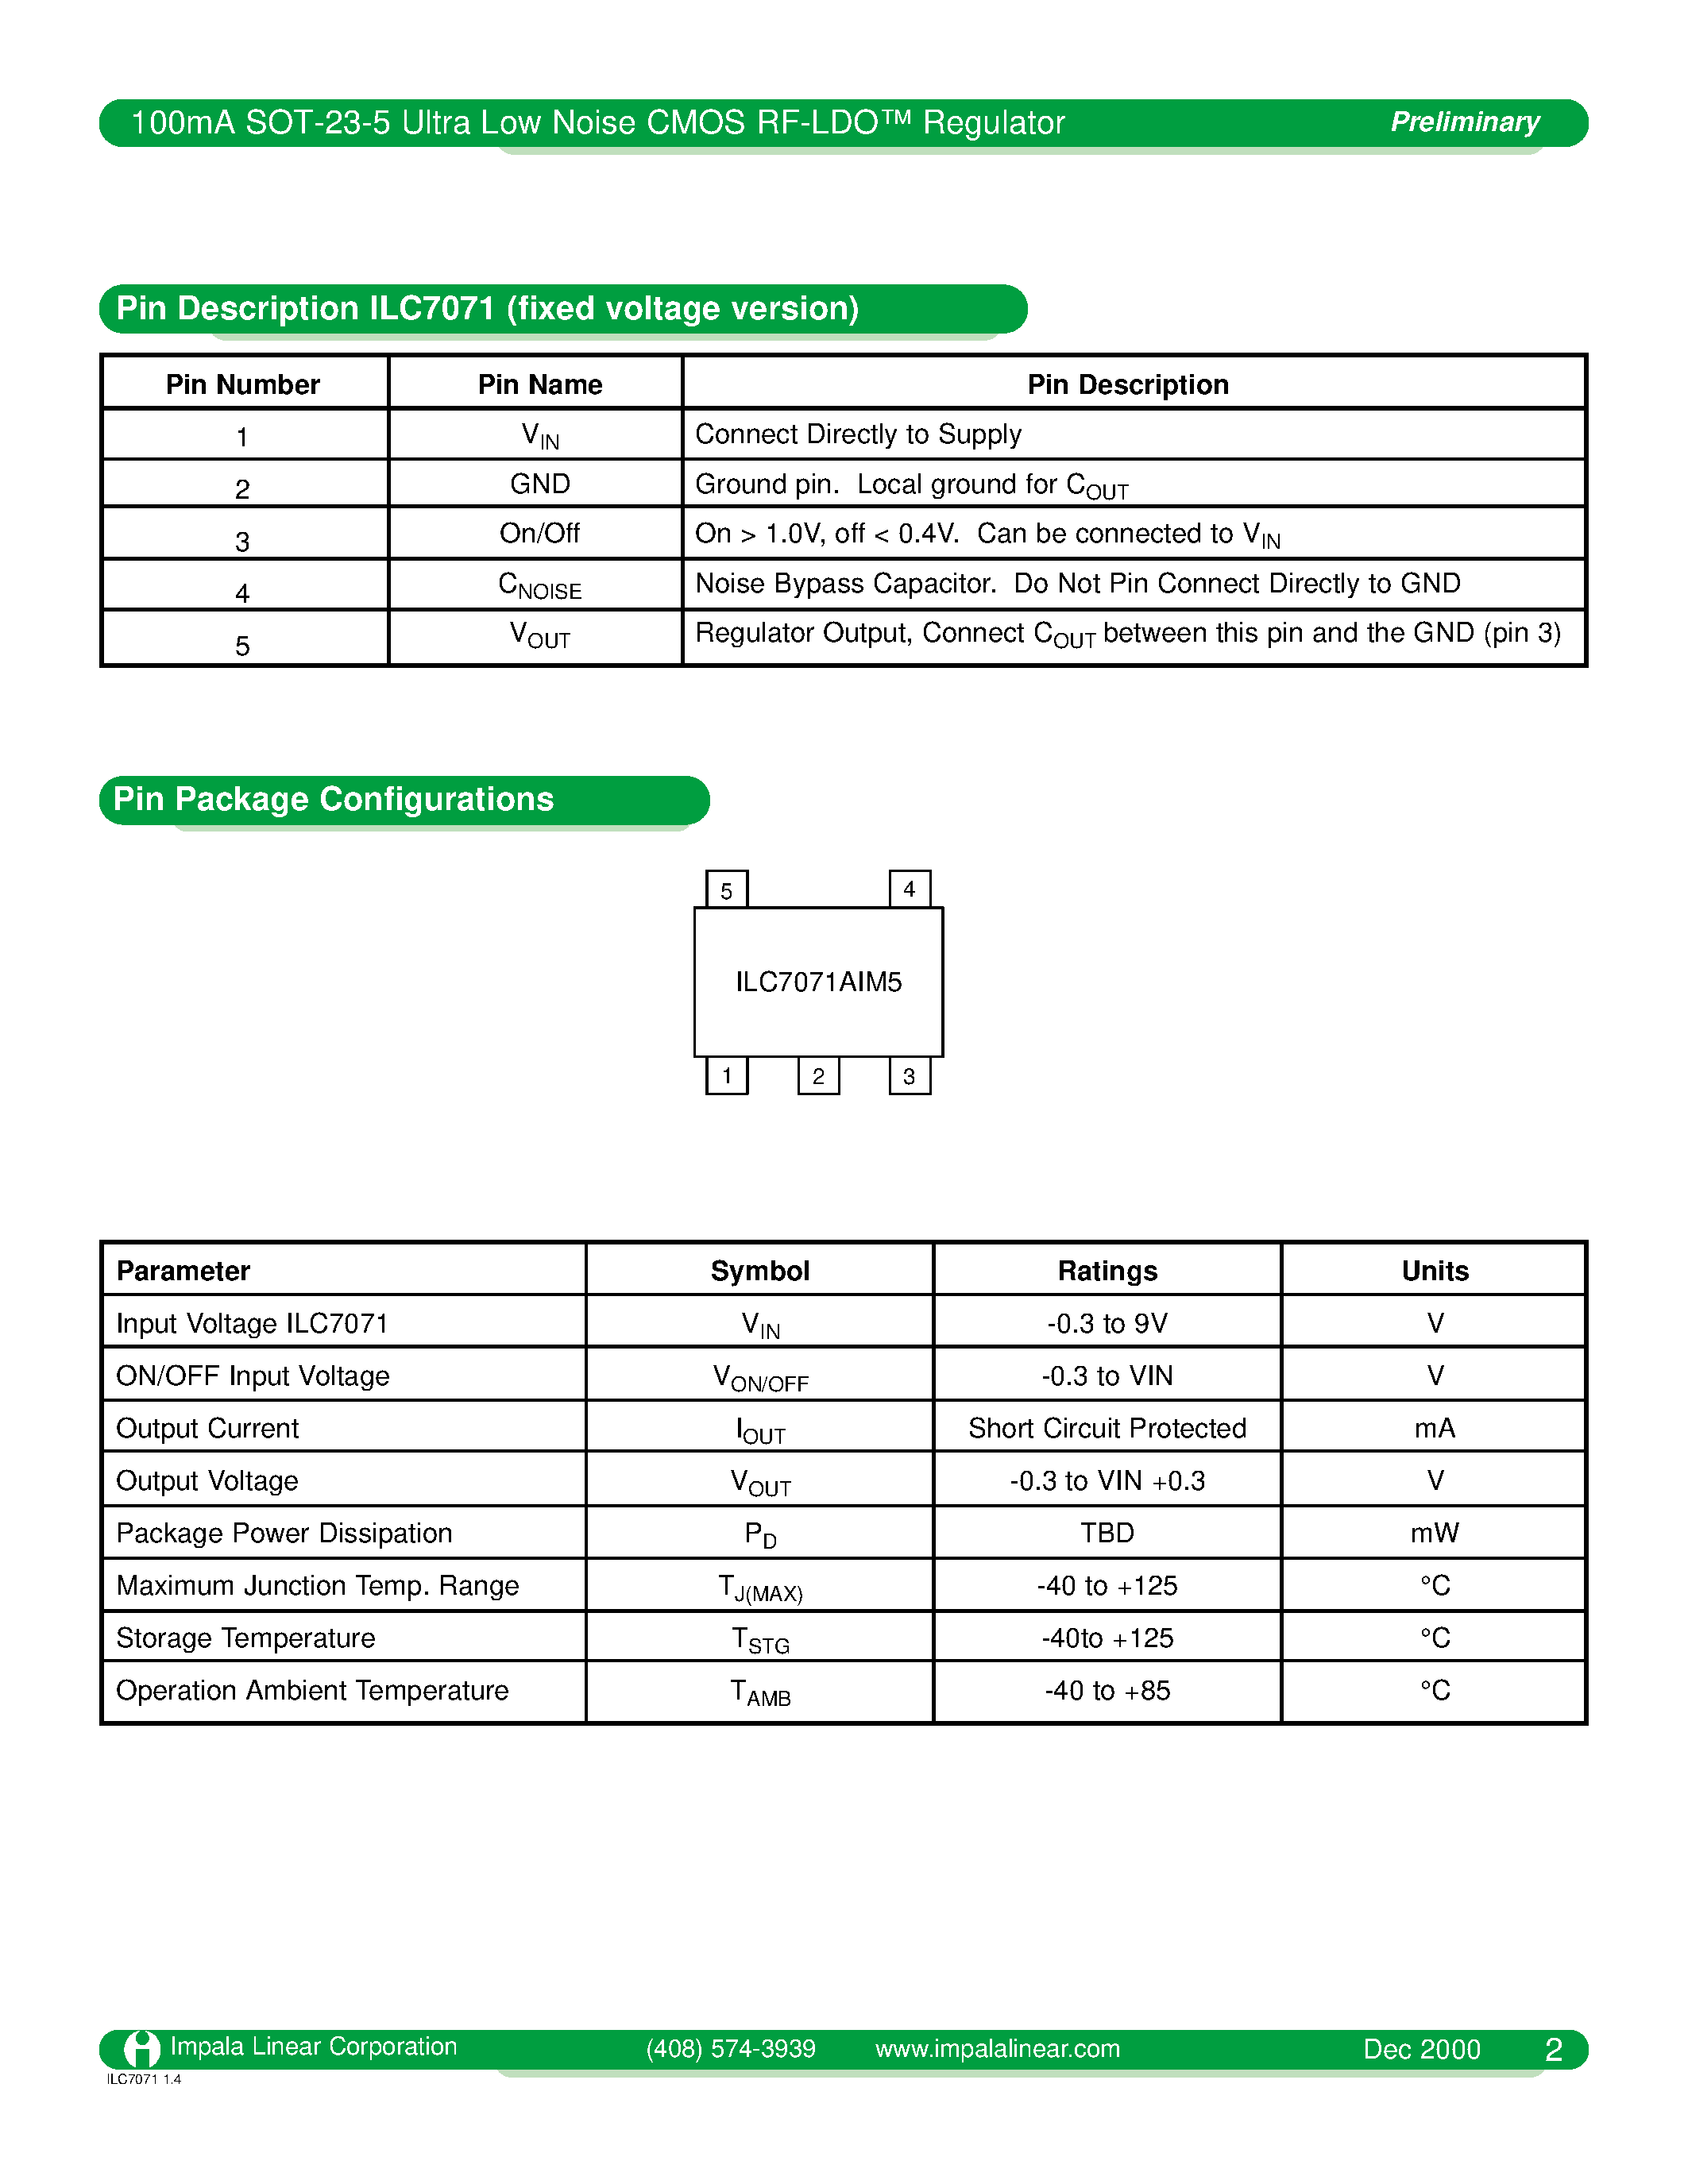 Datasheet ILC7071AIM5-36 - 100MA SOT-23-5 ULTRA LOW NOISE CMOS RF-LDO REGULATOR page 2